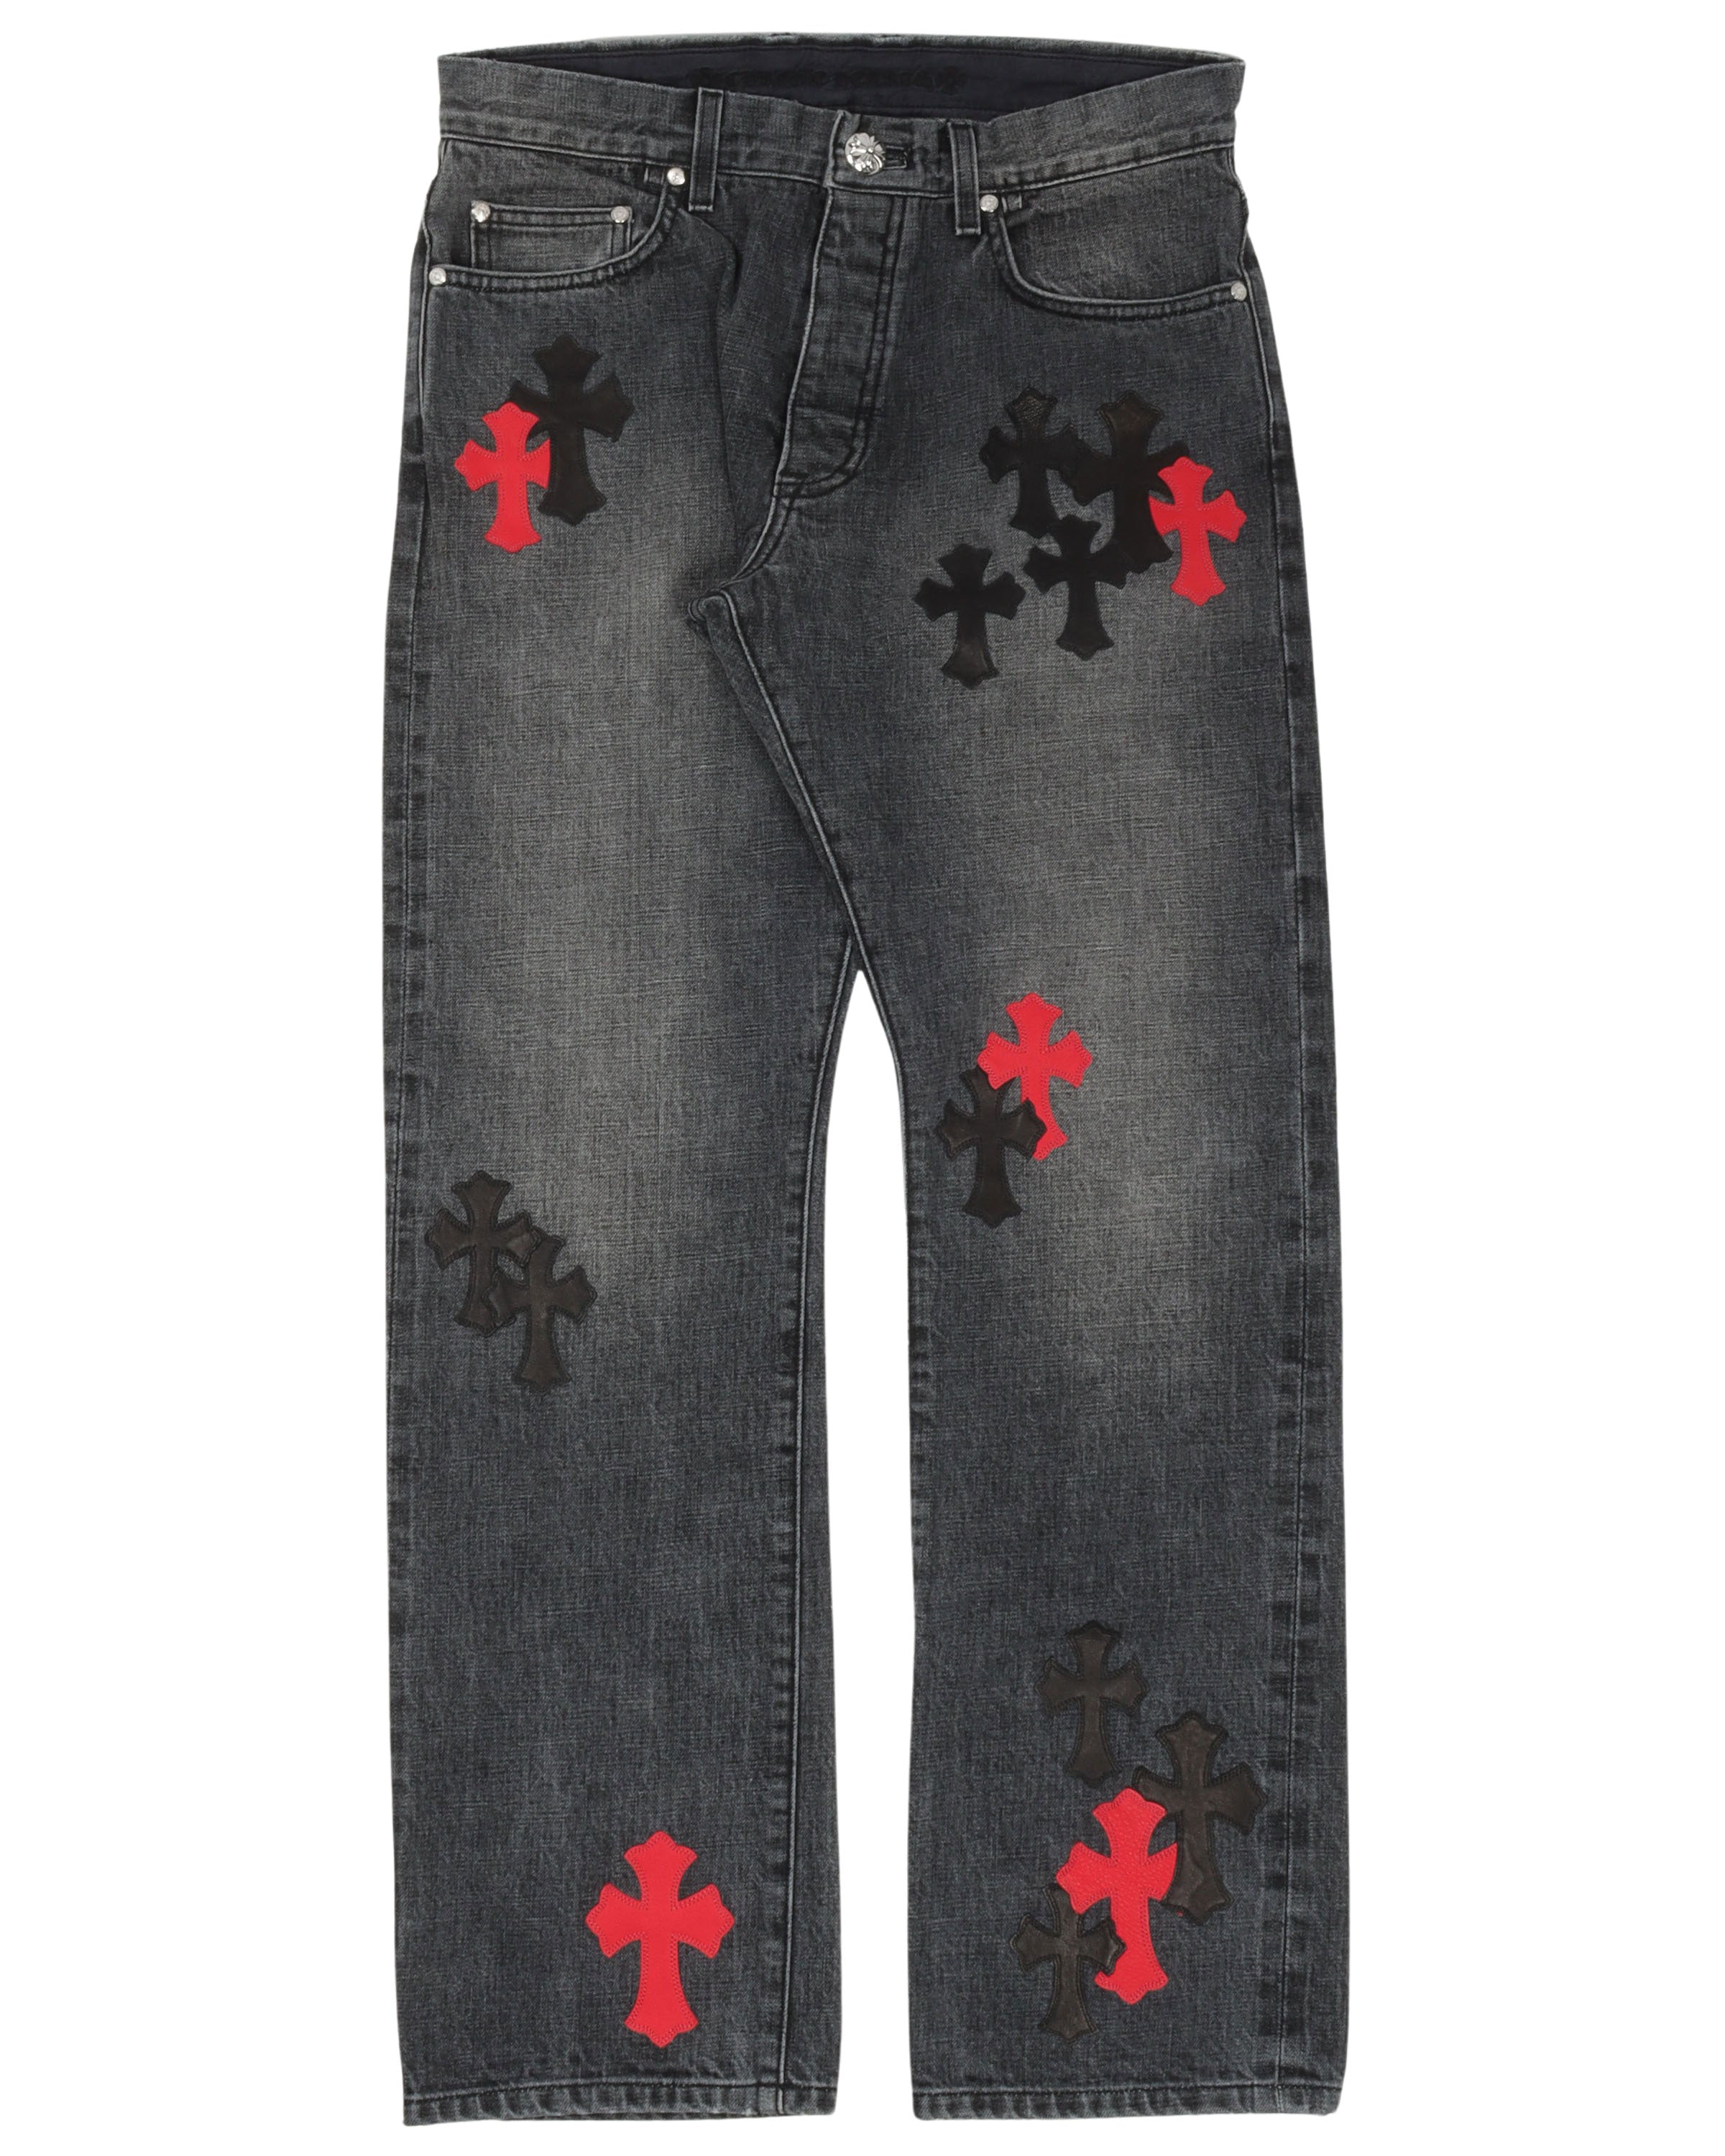 Chrome Hearts Multi-Cross Fade Jeans